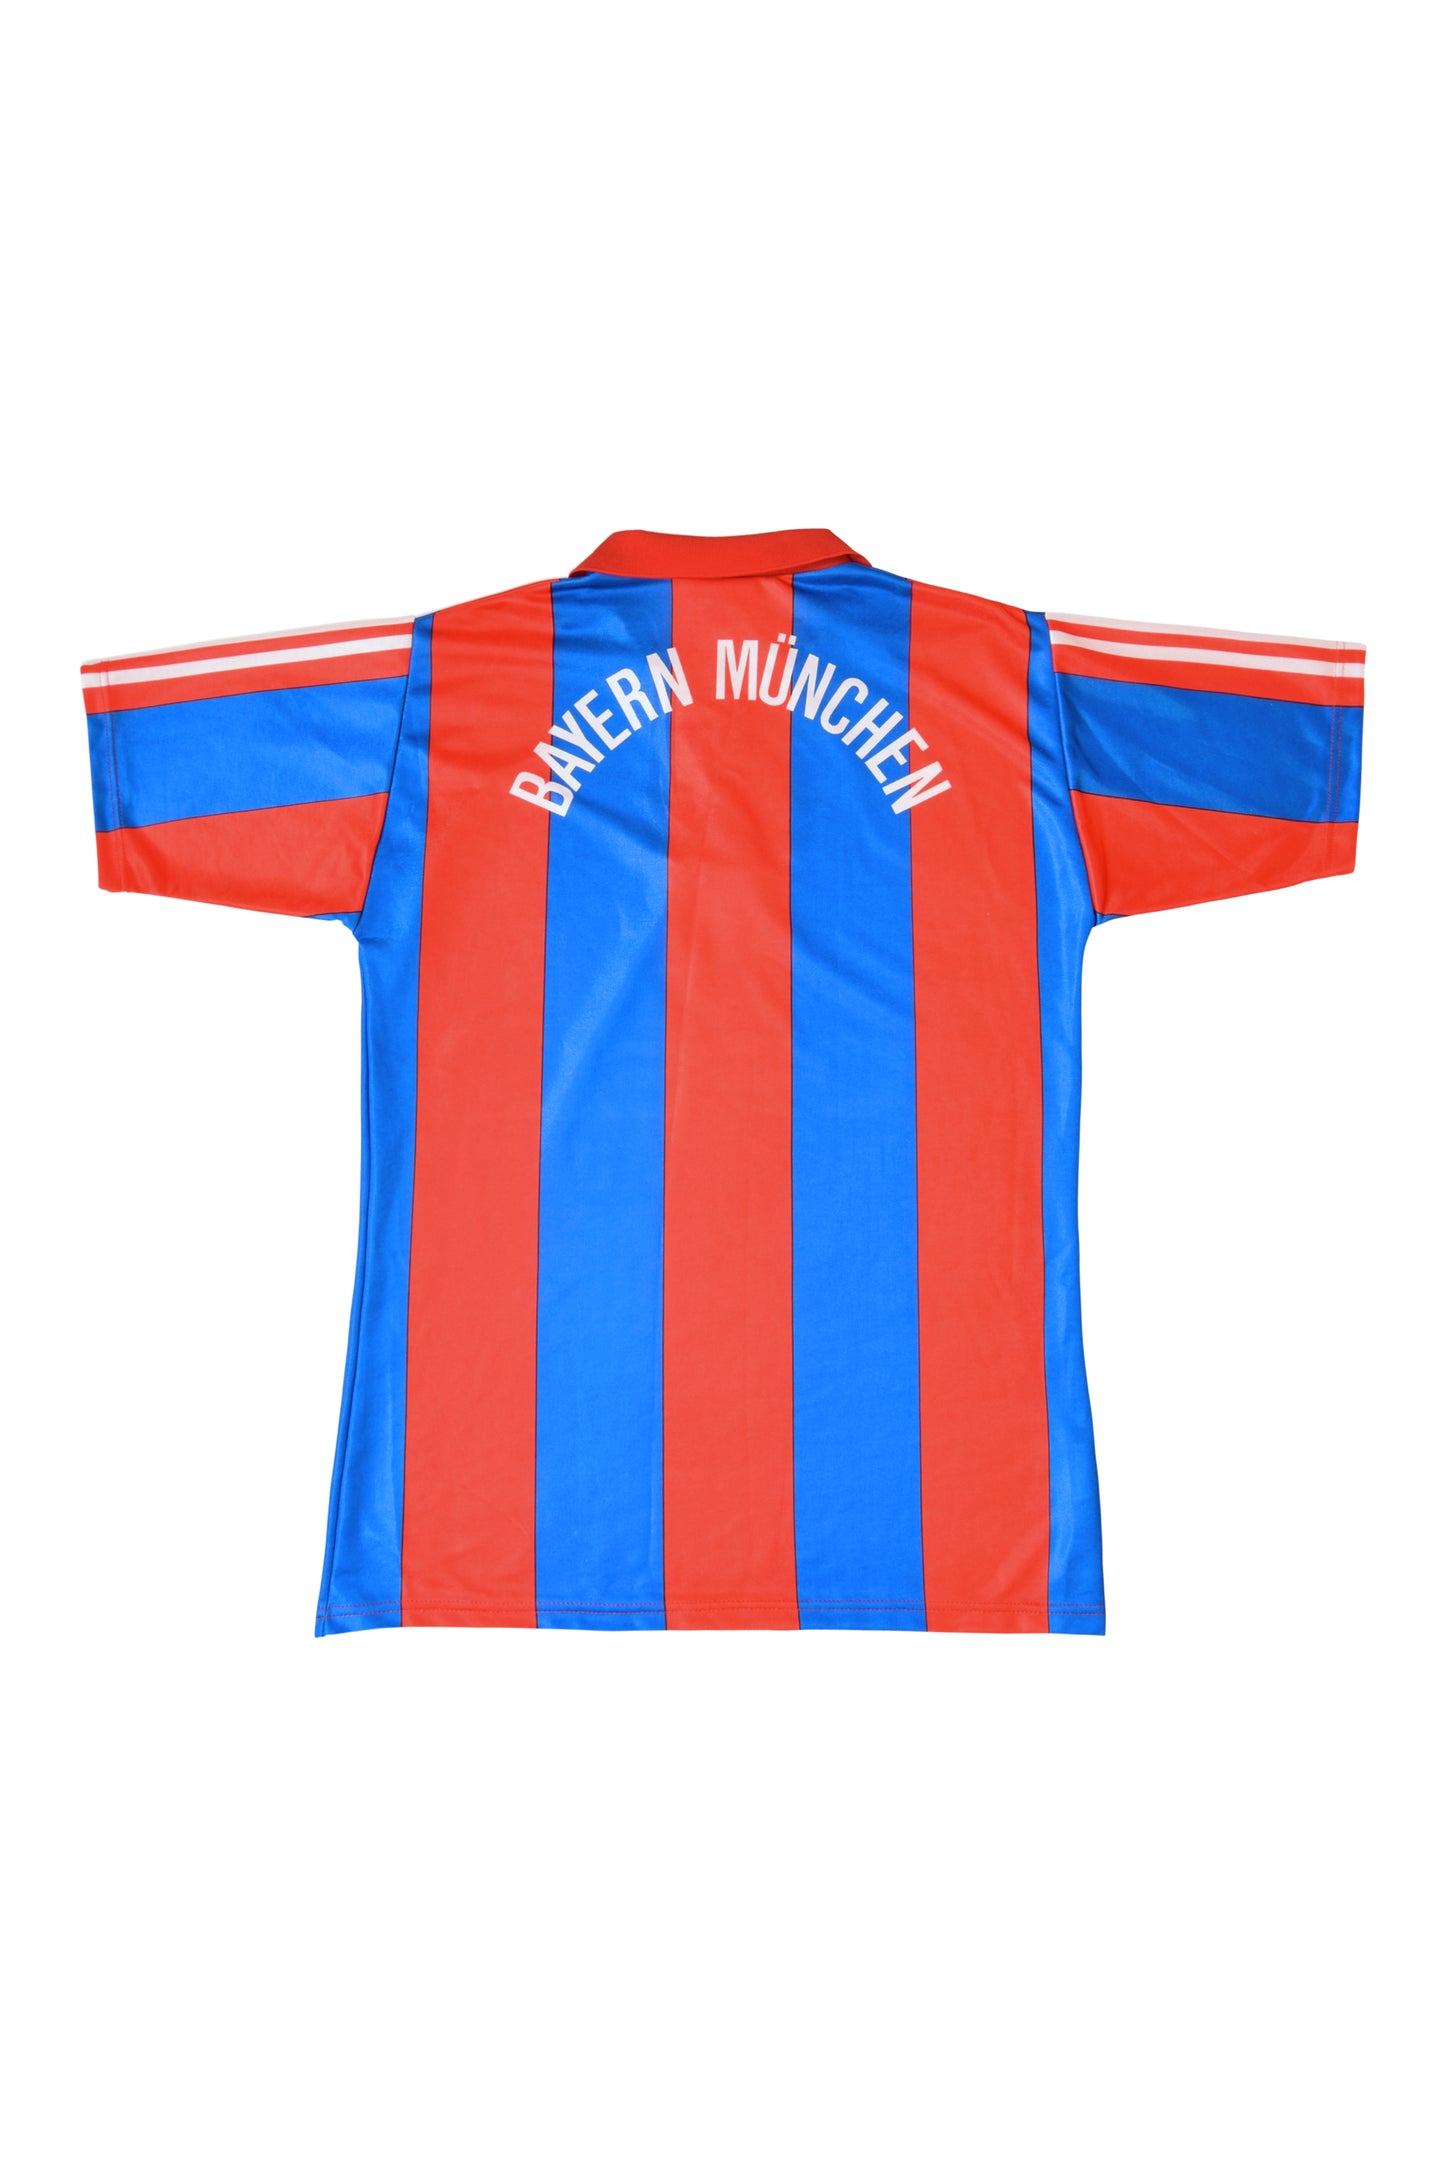 Very Rare Bayern Munich / Munchen Adidas 1989-1990 Special Edition 90th Anniversary Football shirt